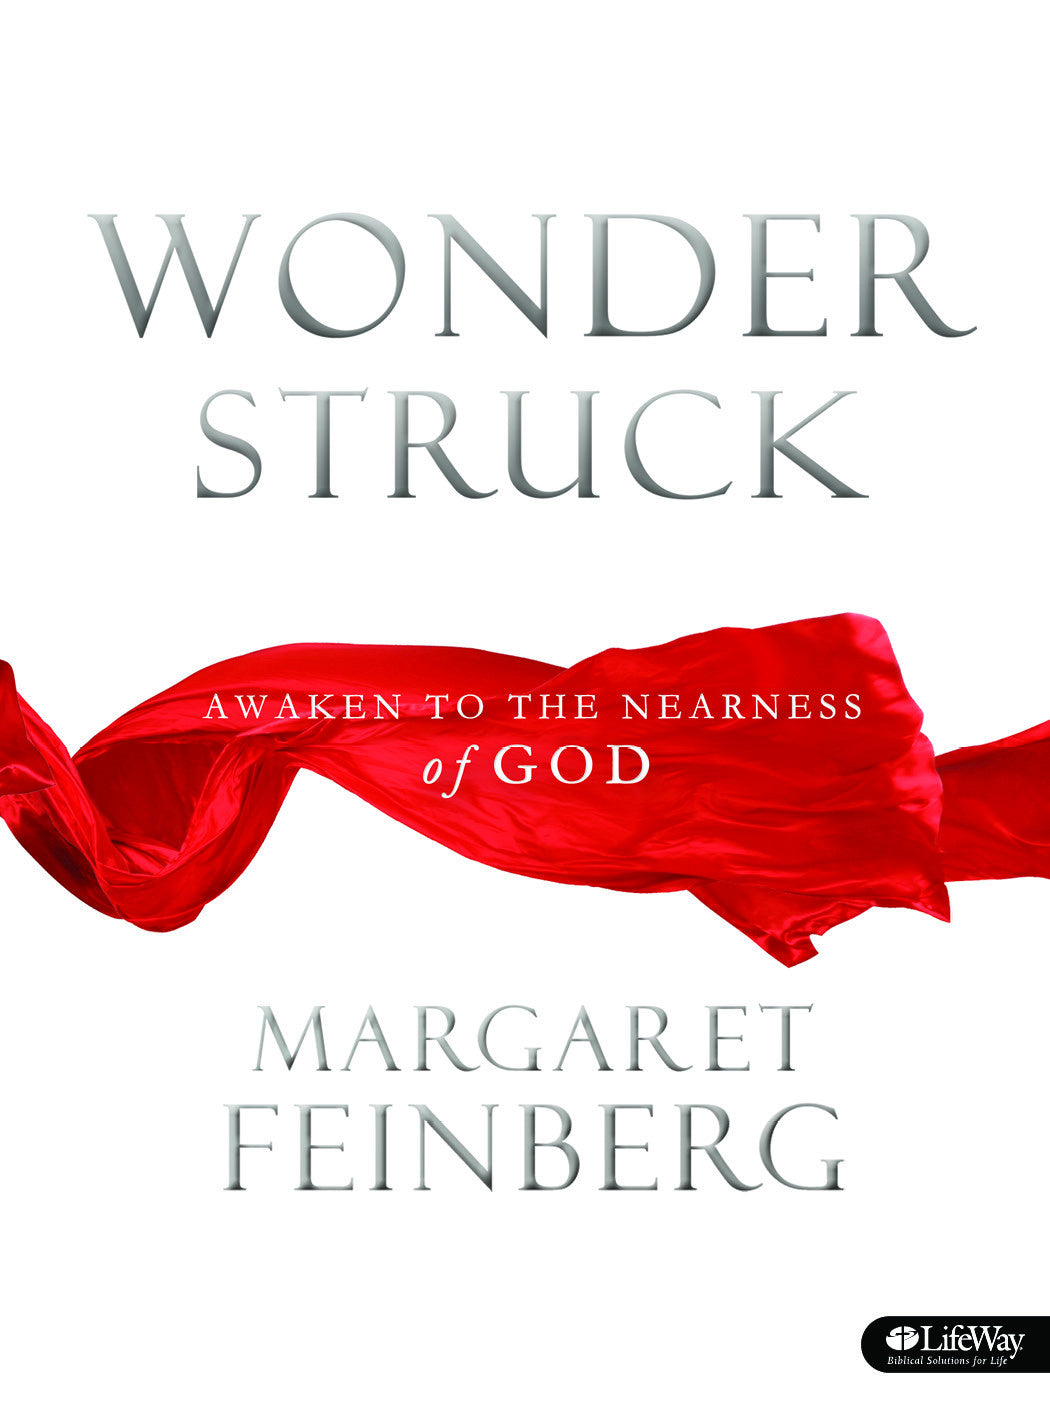 Wonderstruck: Awaken to the Nearness of God 7-Session DVD Bible Study Kit